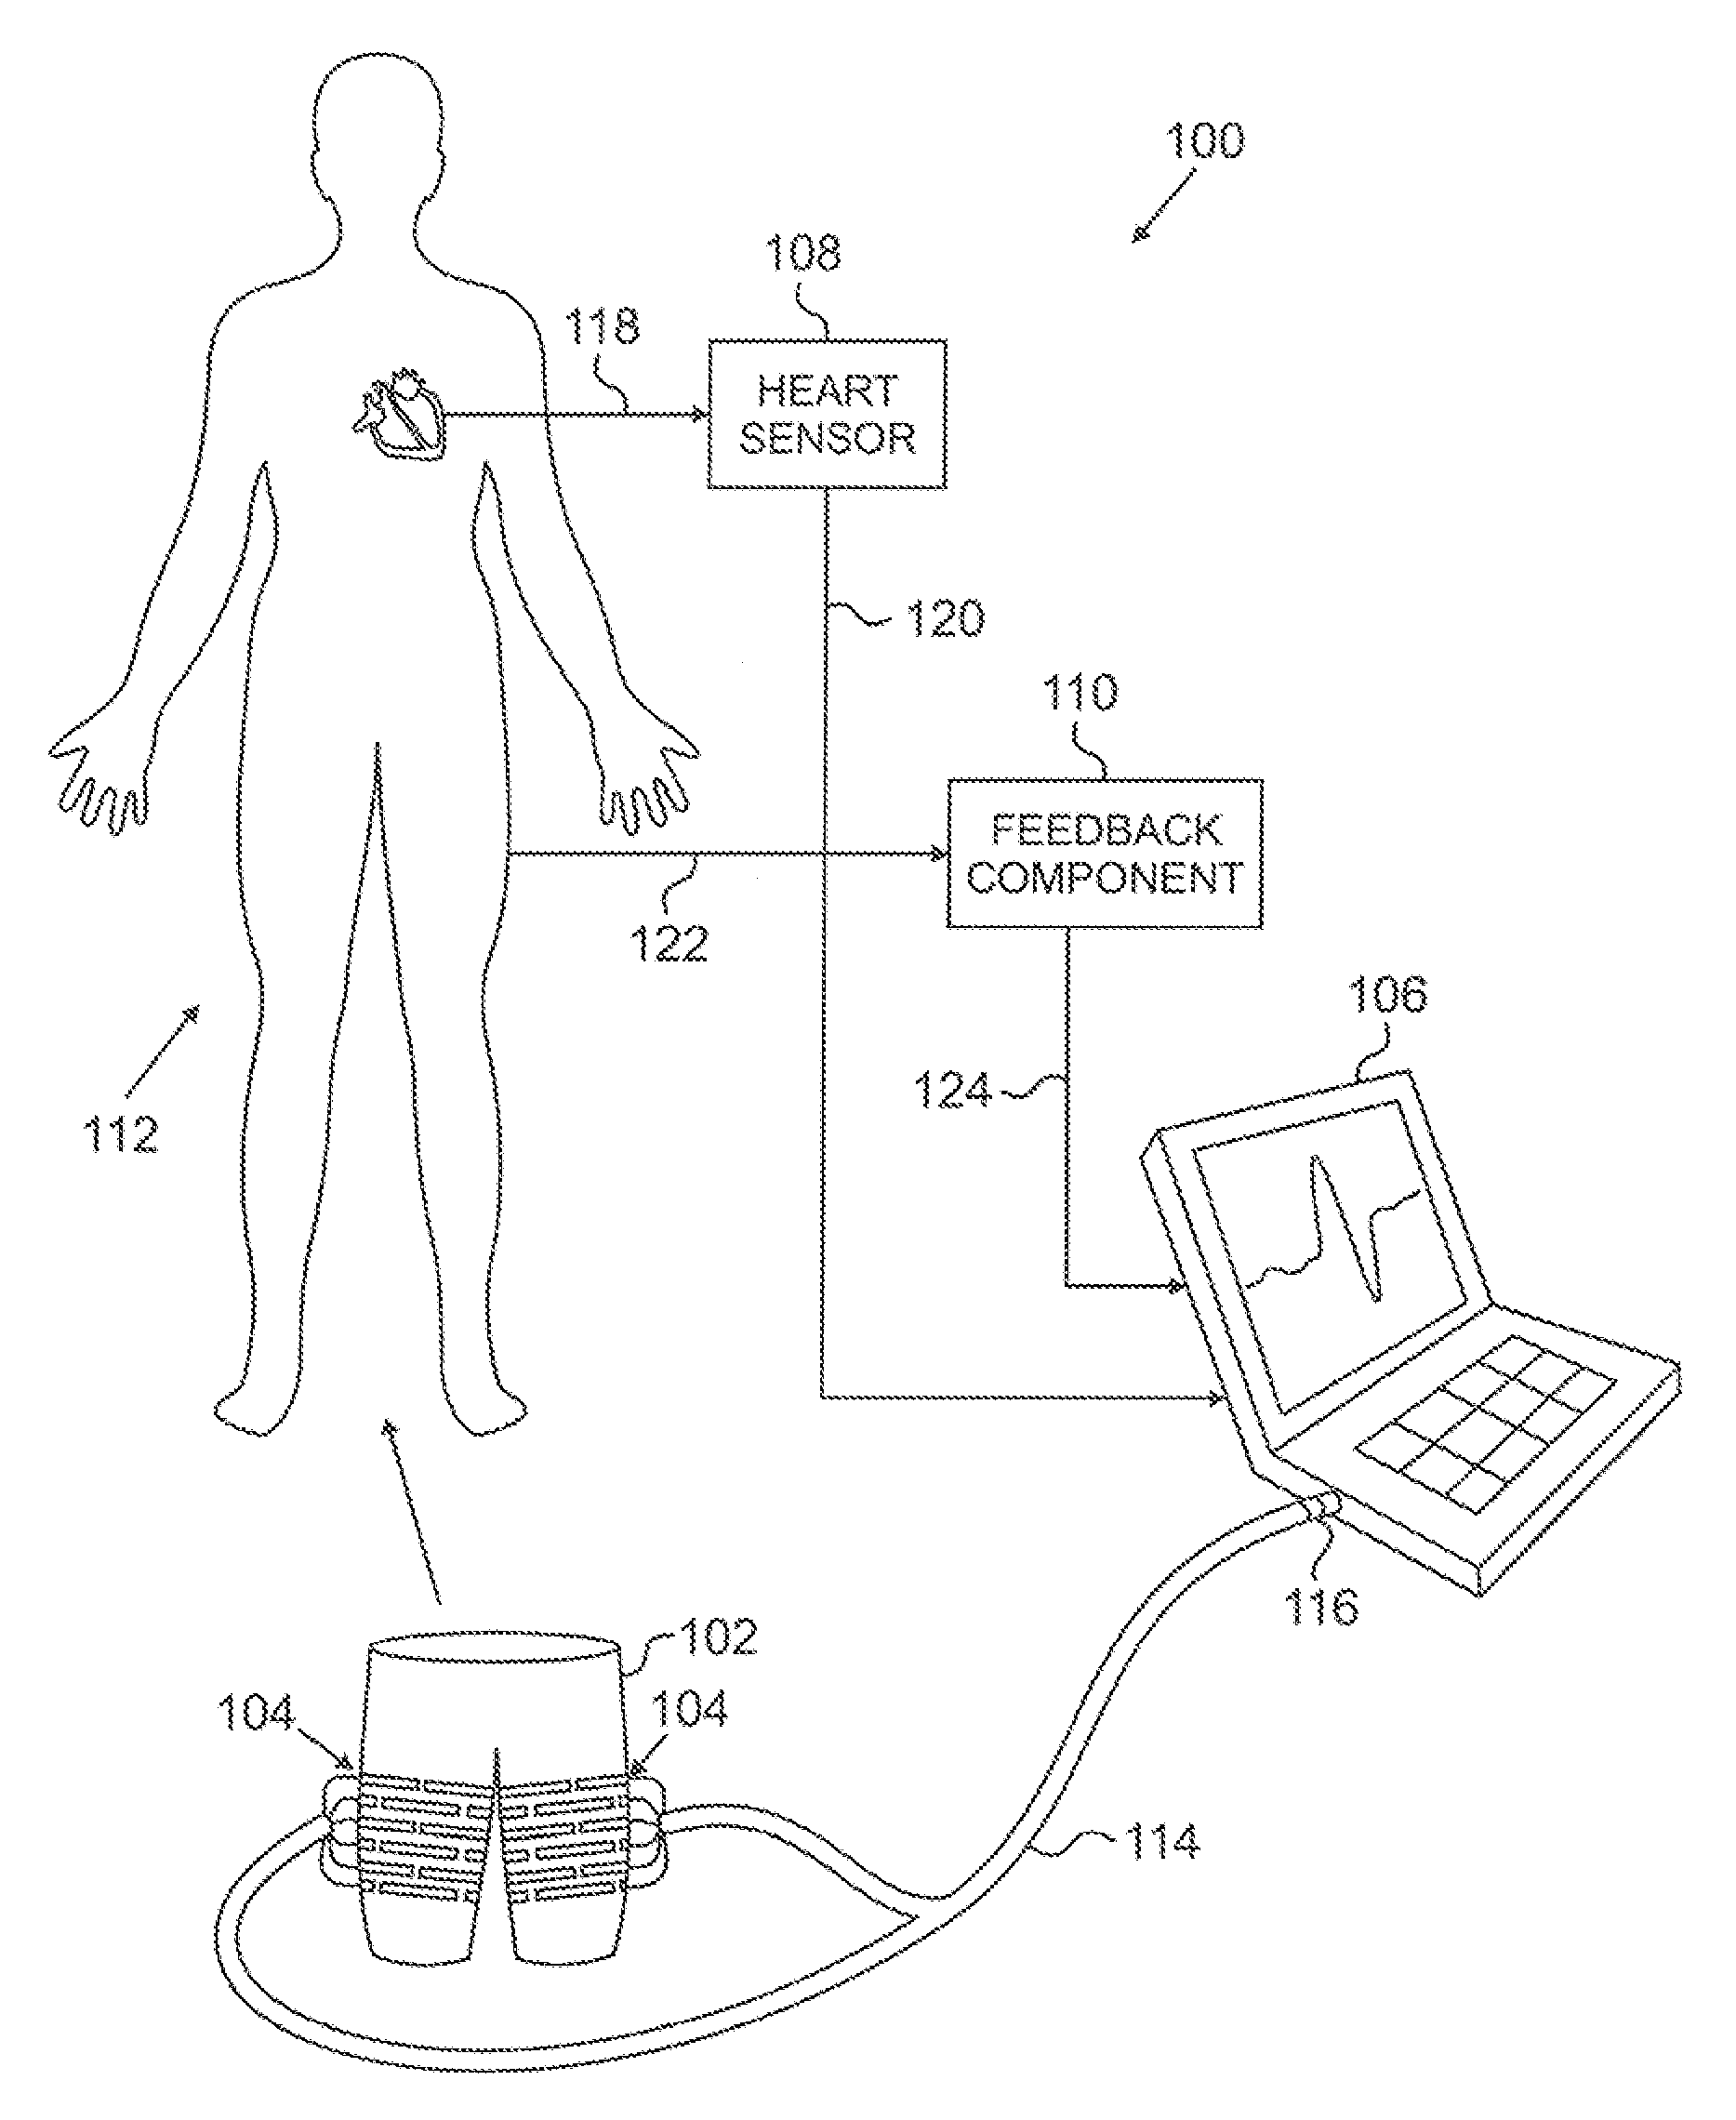 External counterpulsation device using electroactive polymer actuators